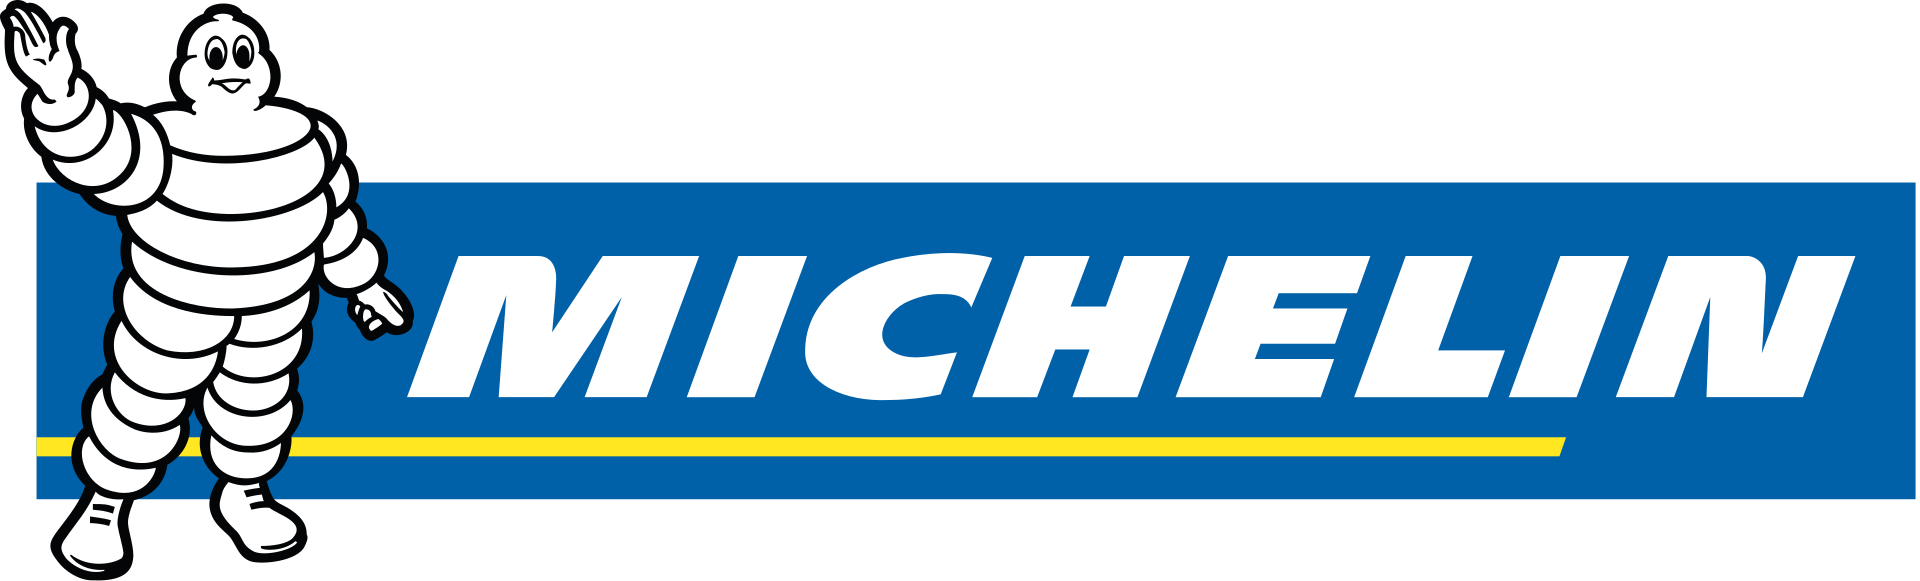 Логотип Michelin (Мишлен)